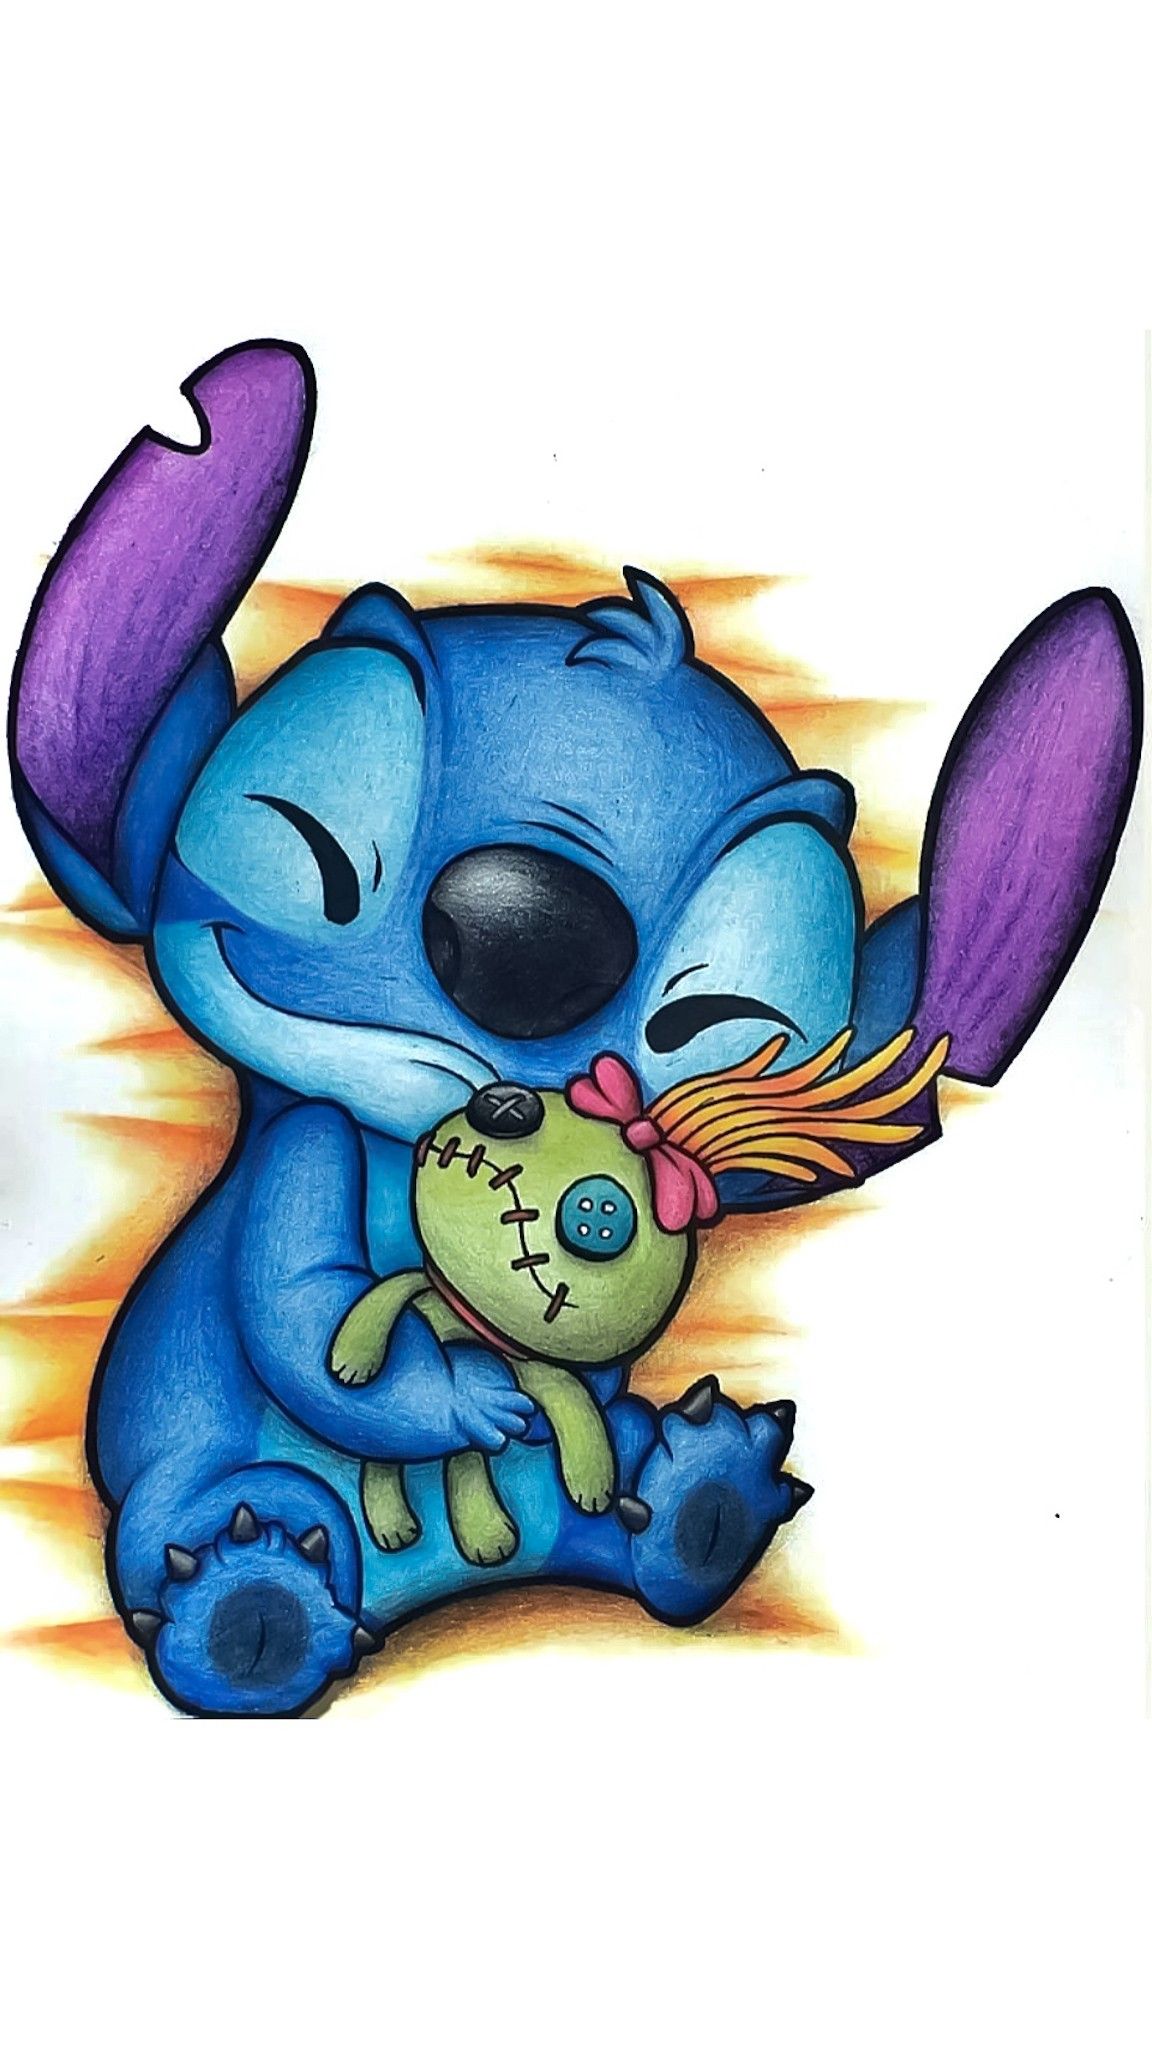 Cute Disney Stitch Wallpapers